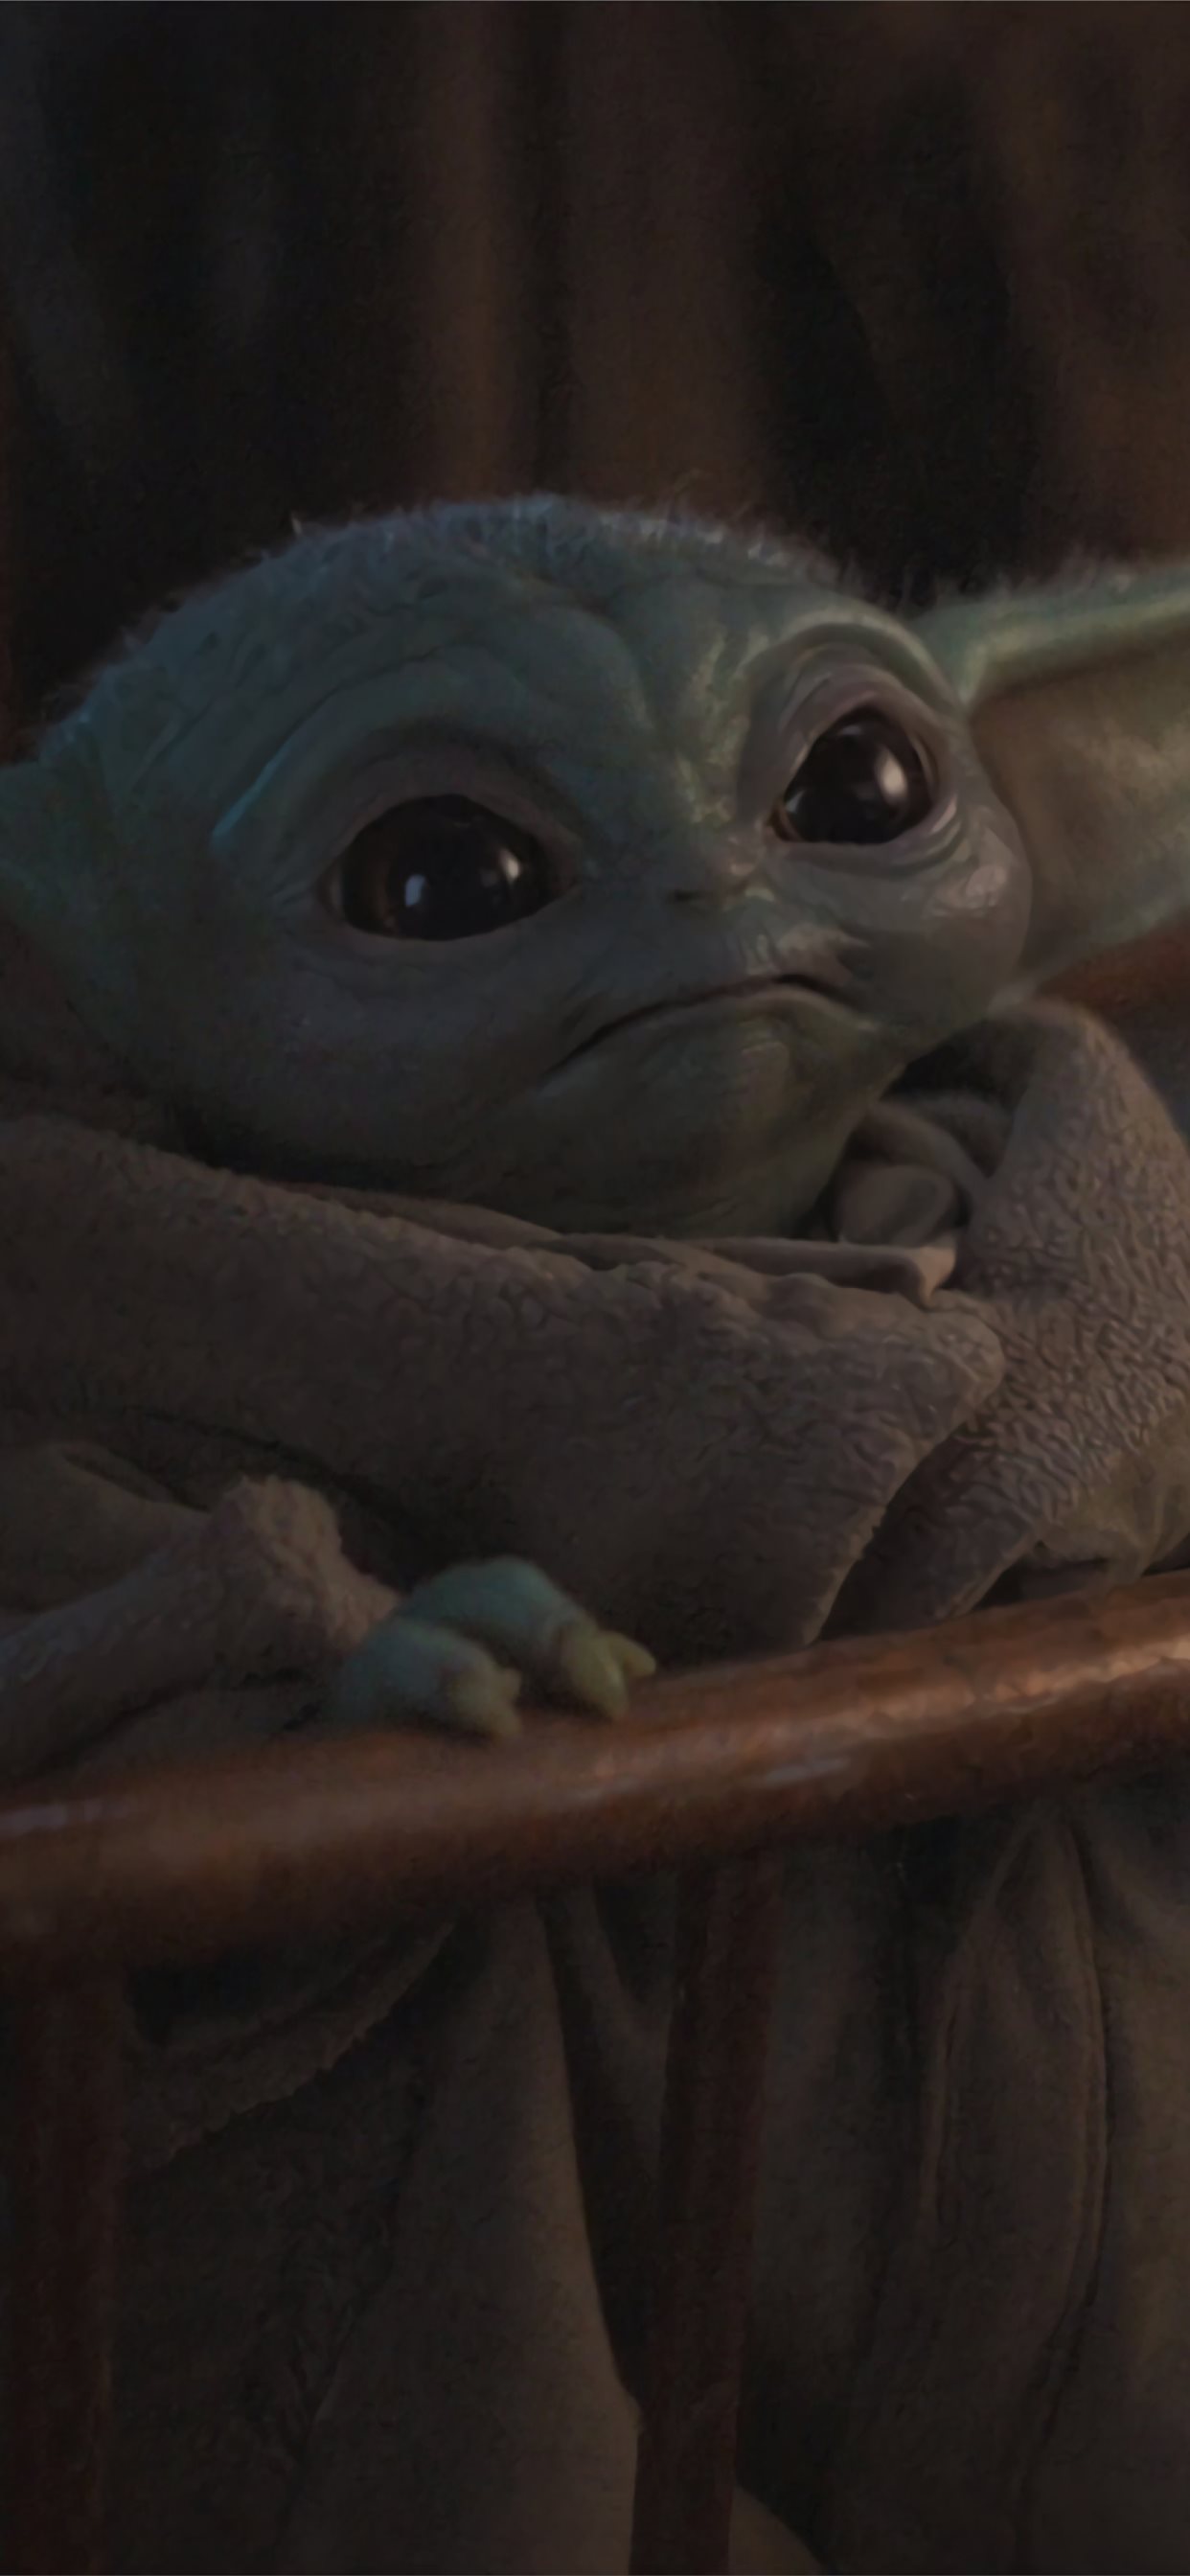 Cute Baby Yoda from Mandalorian Resolution iPhone Wallpapers Free Download Yoda Wallpaper Iphone